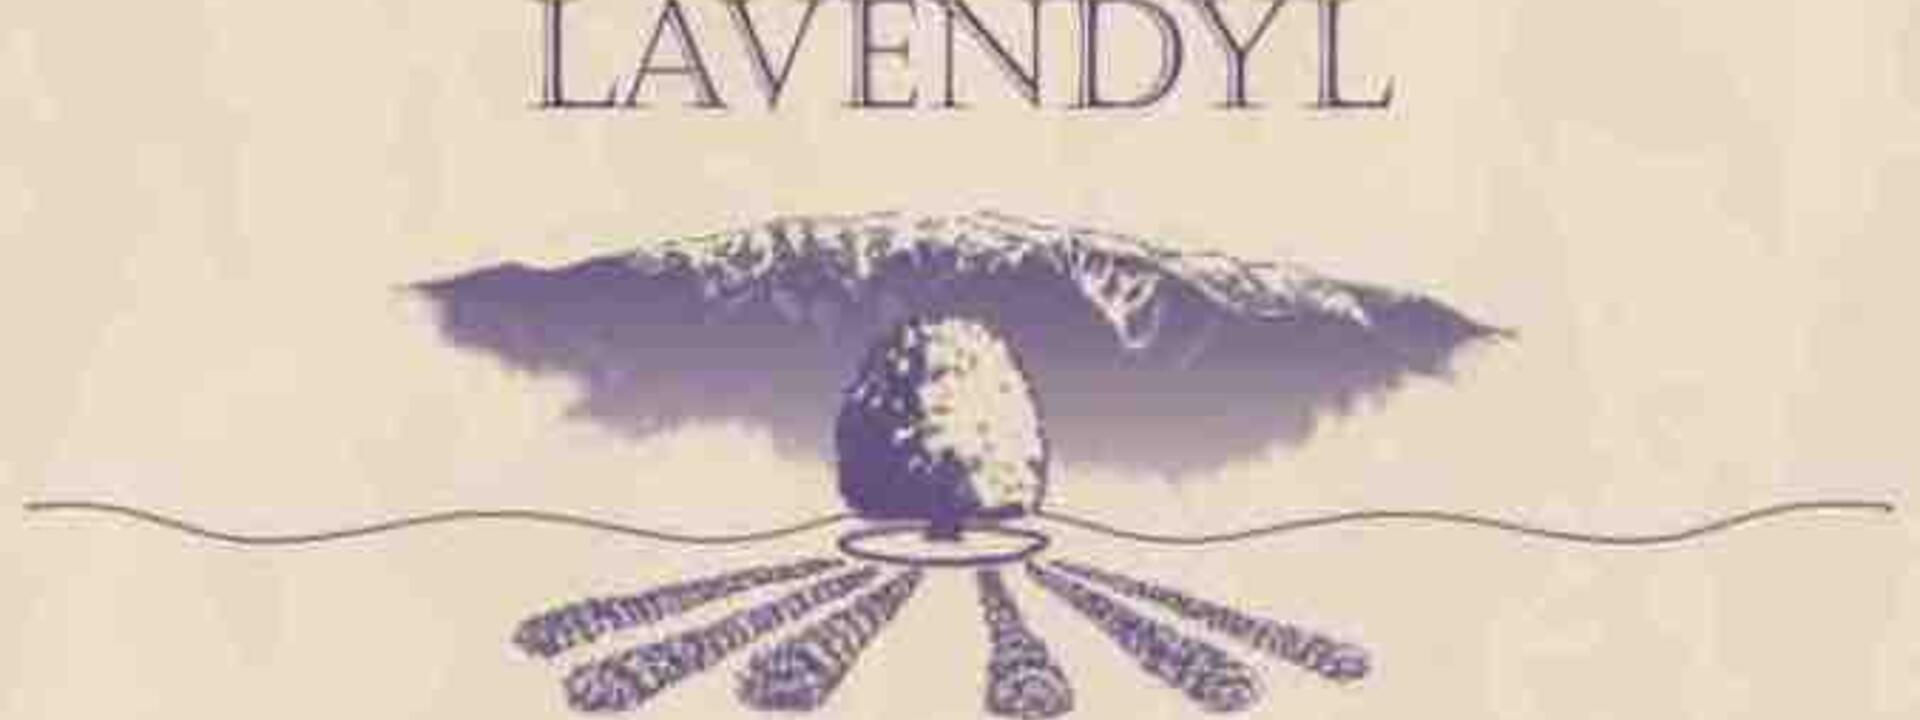 lavendyl-logo-large.jpg